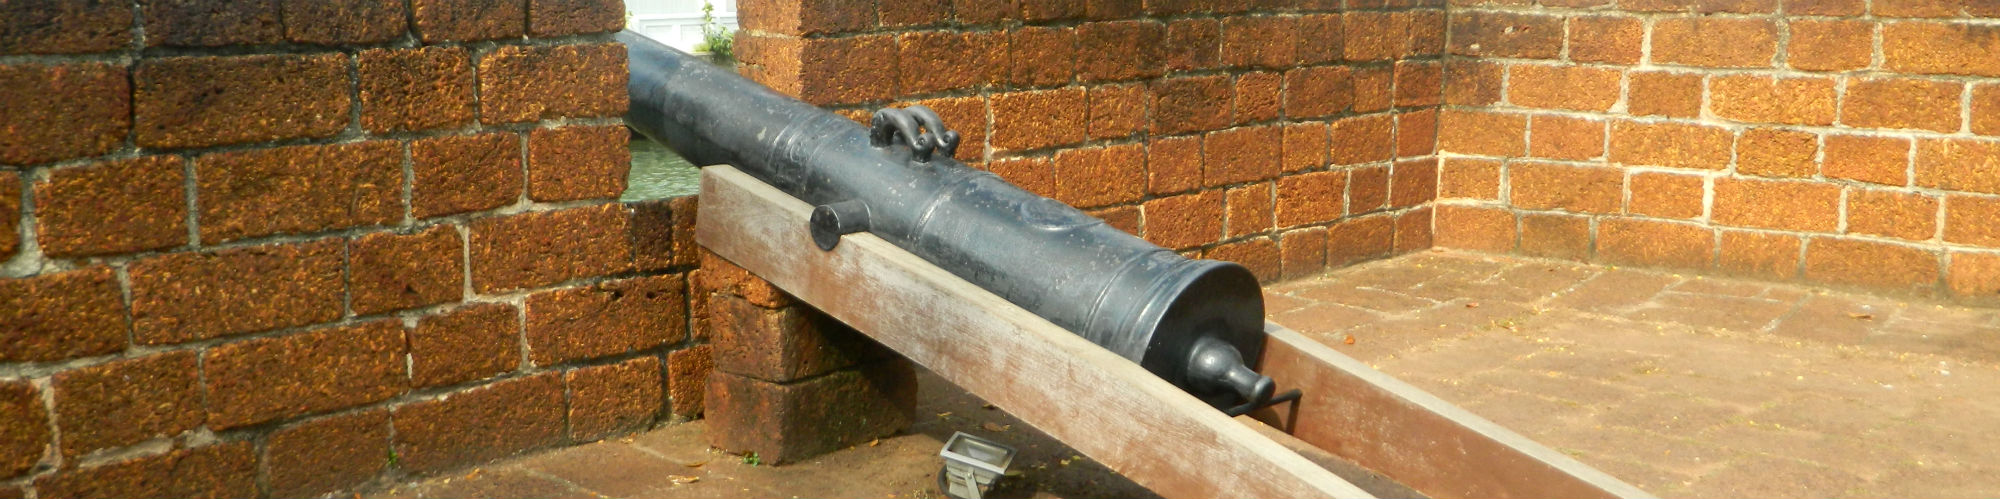 Cannon at Bastion Middleburg, Malacca, Malaysia